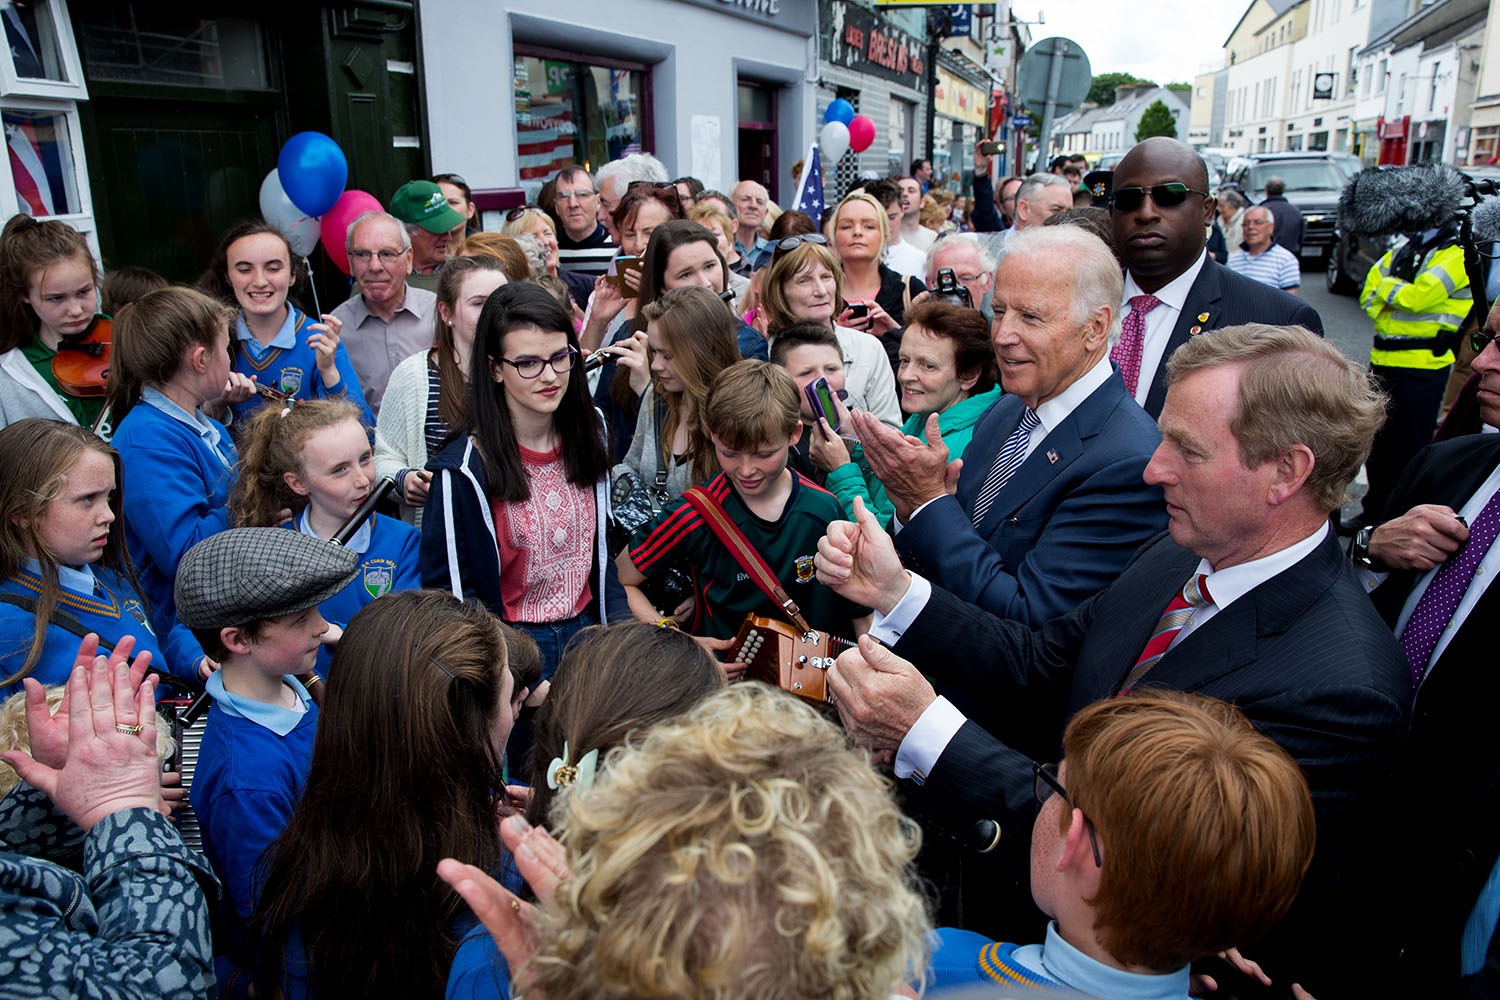 Vice President Joe Biden and Taoiseach Enda Kenny shake hands with people in Ballina, Ireland, June 22, 2016. (Official White House Photo by David Lienemann)